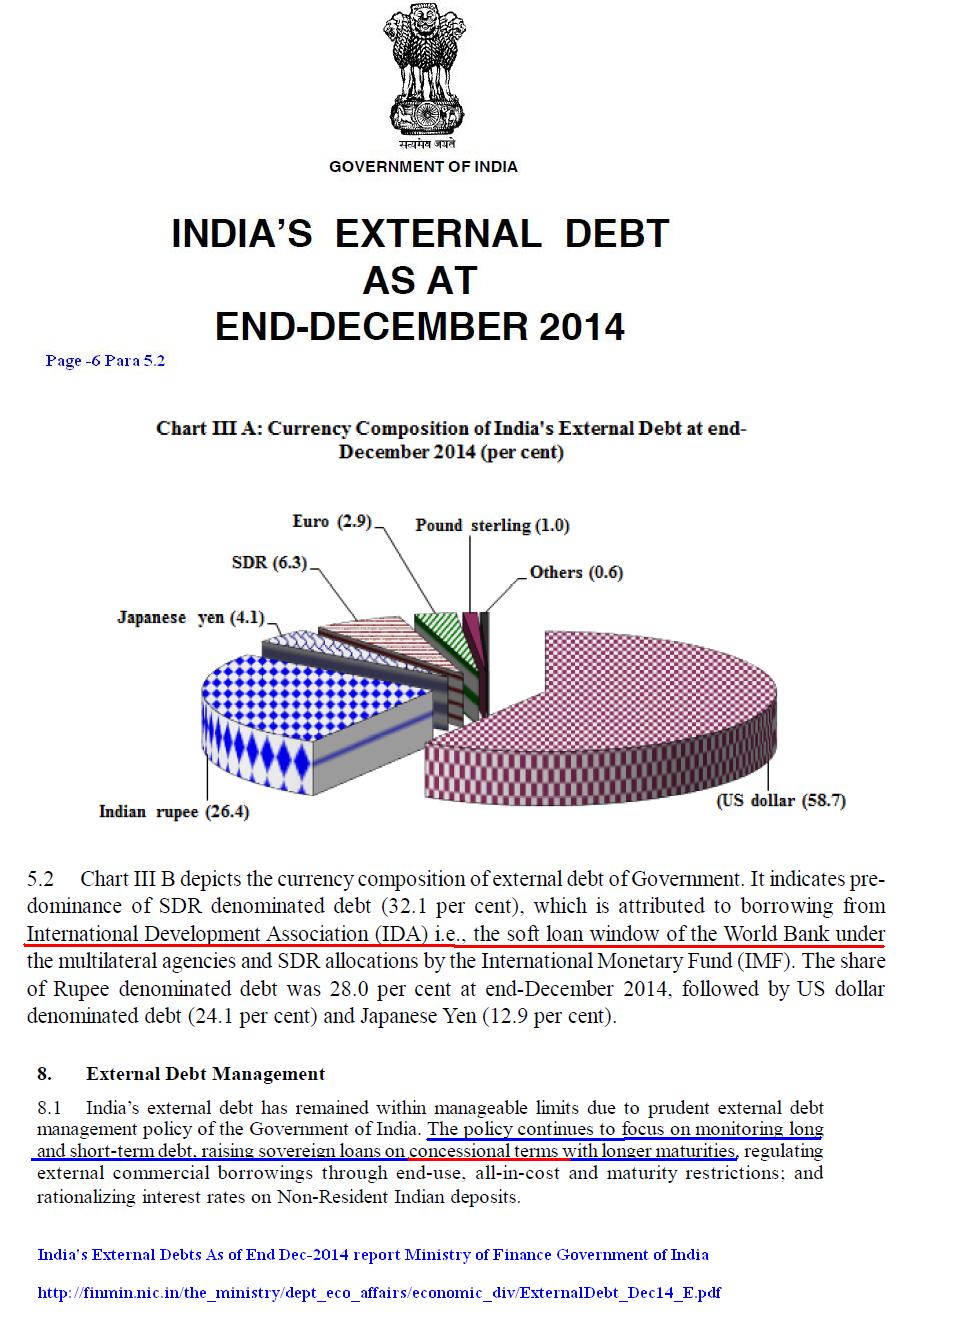 External Debt Managment Concessional Loan.JPG